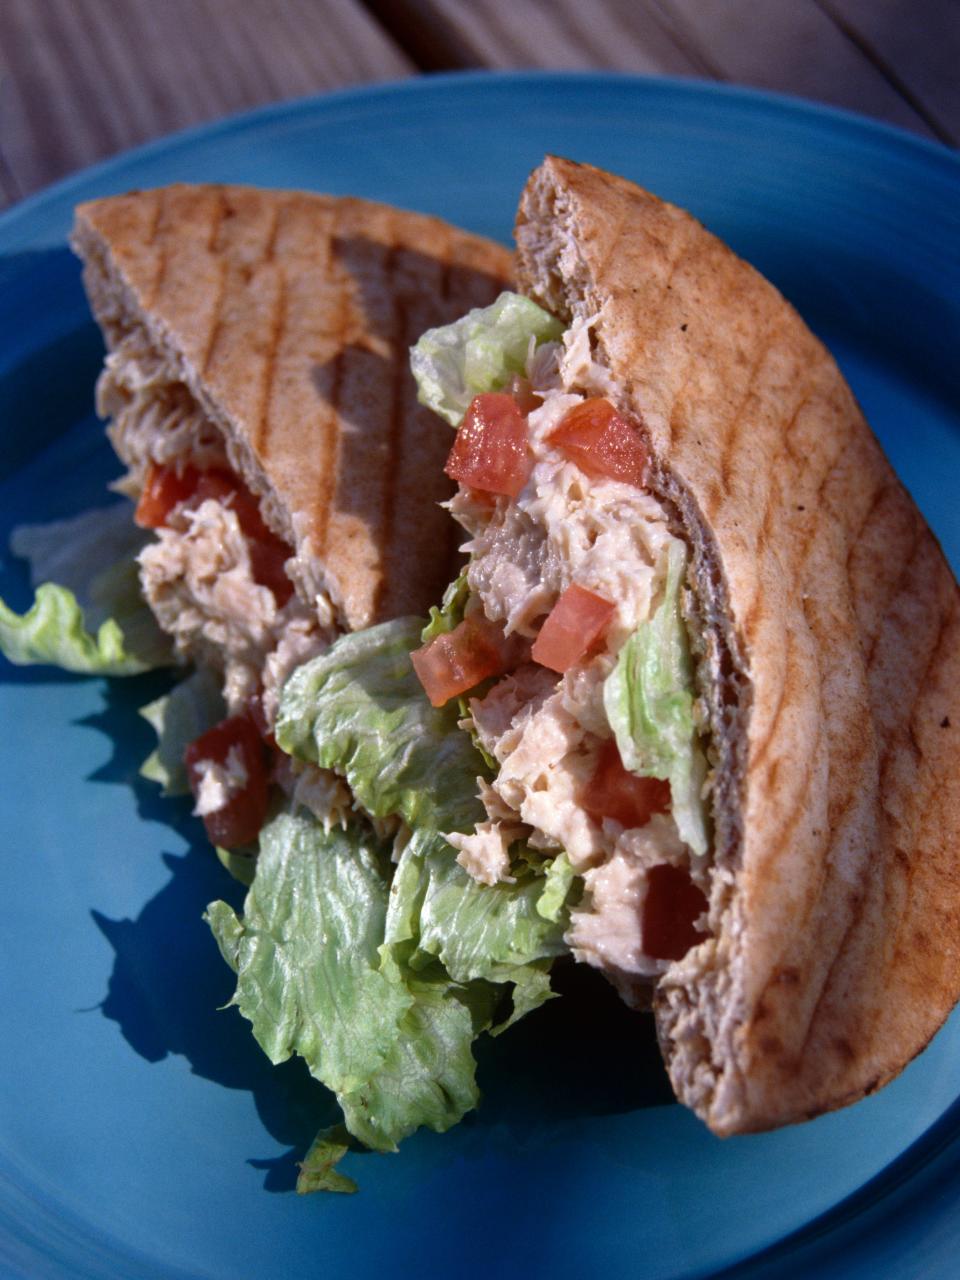 Tuna and salad pita sandwich